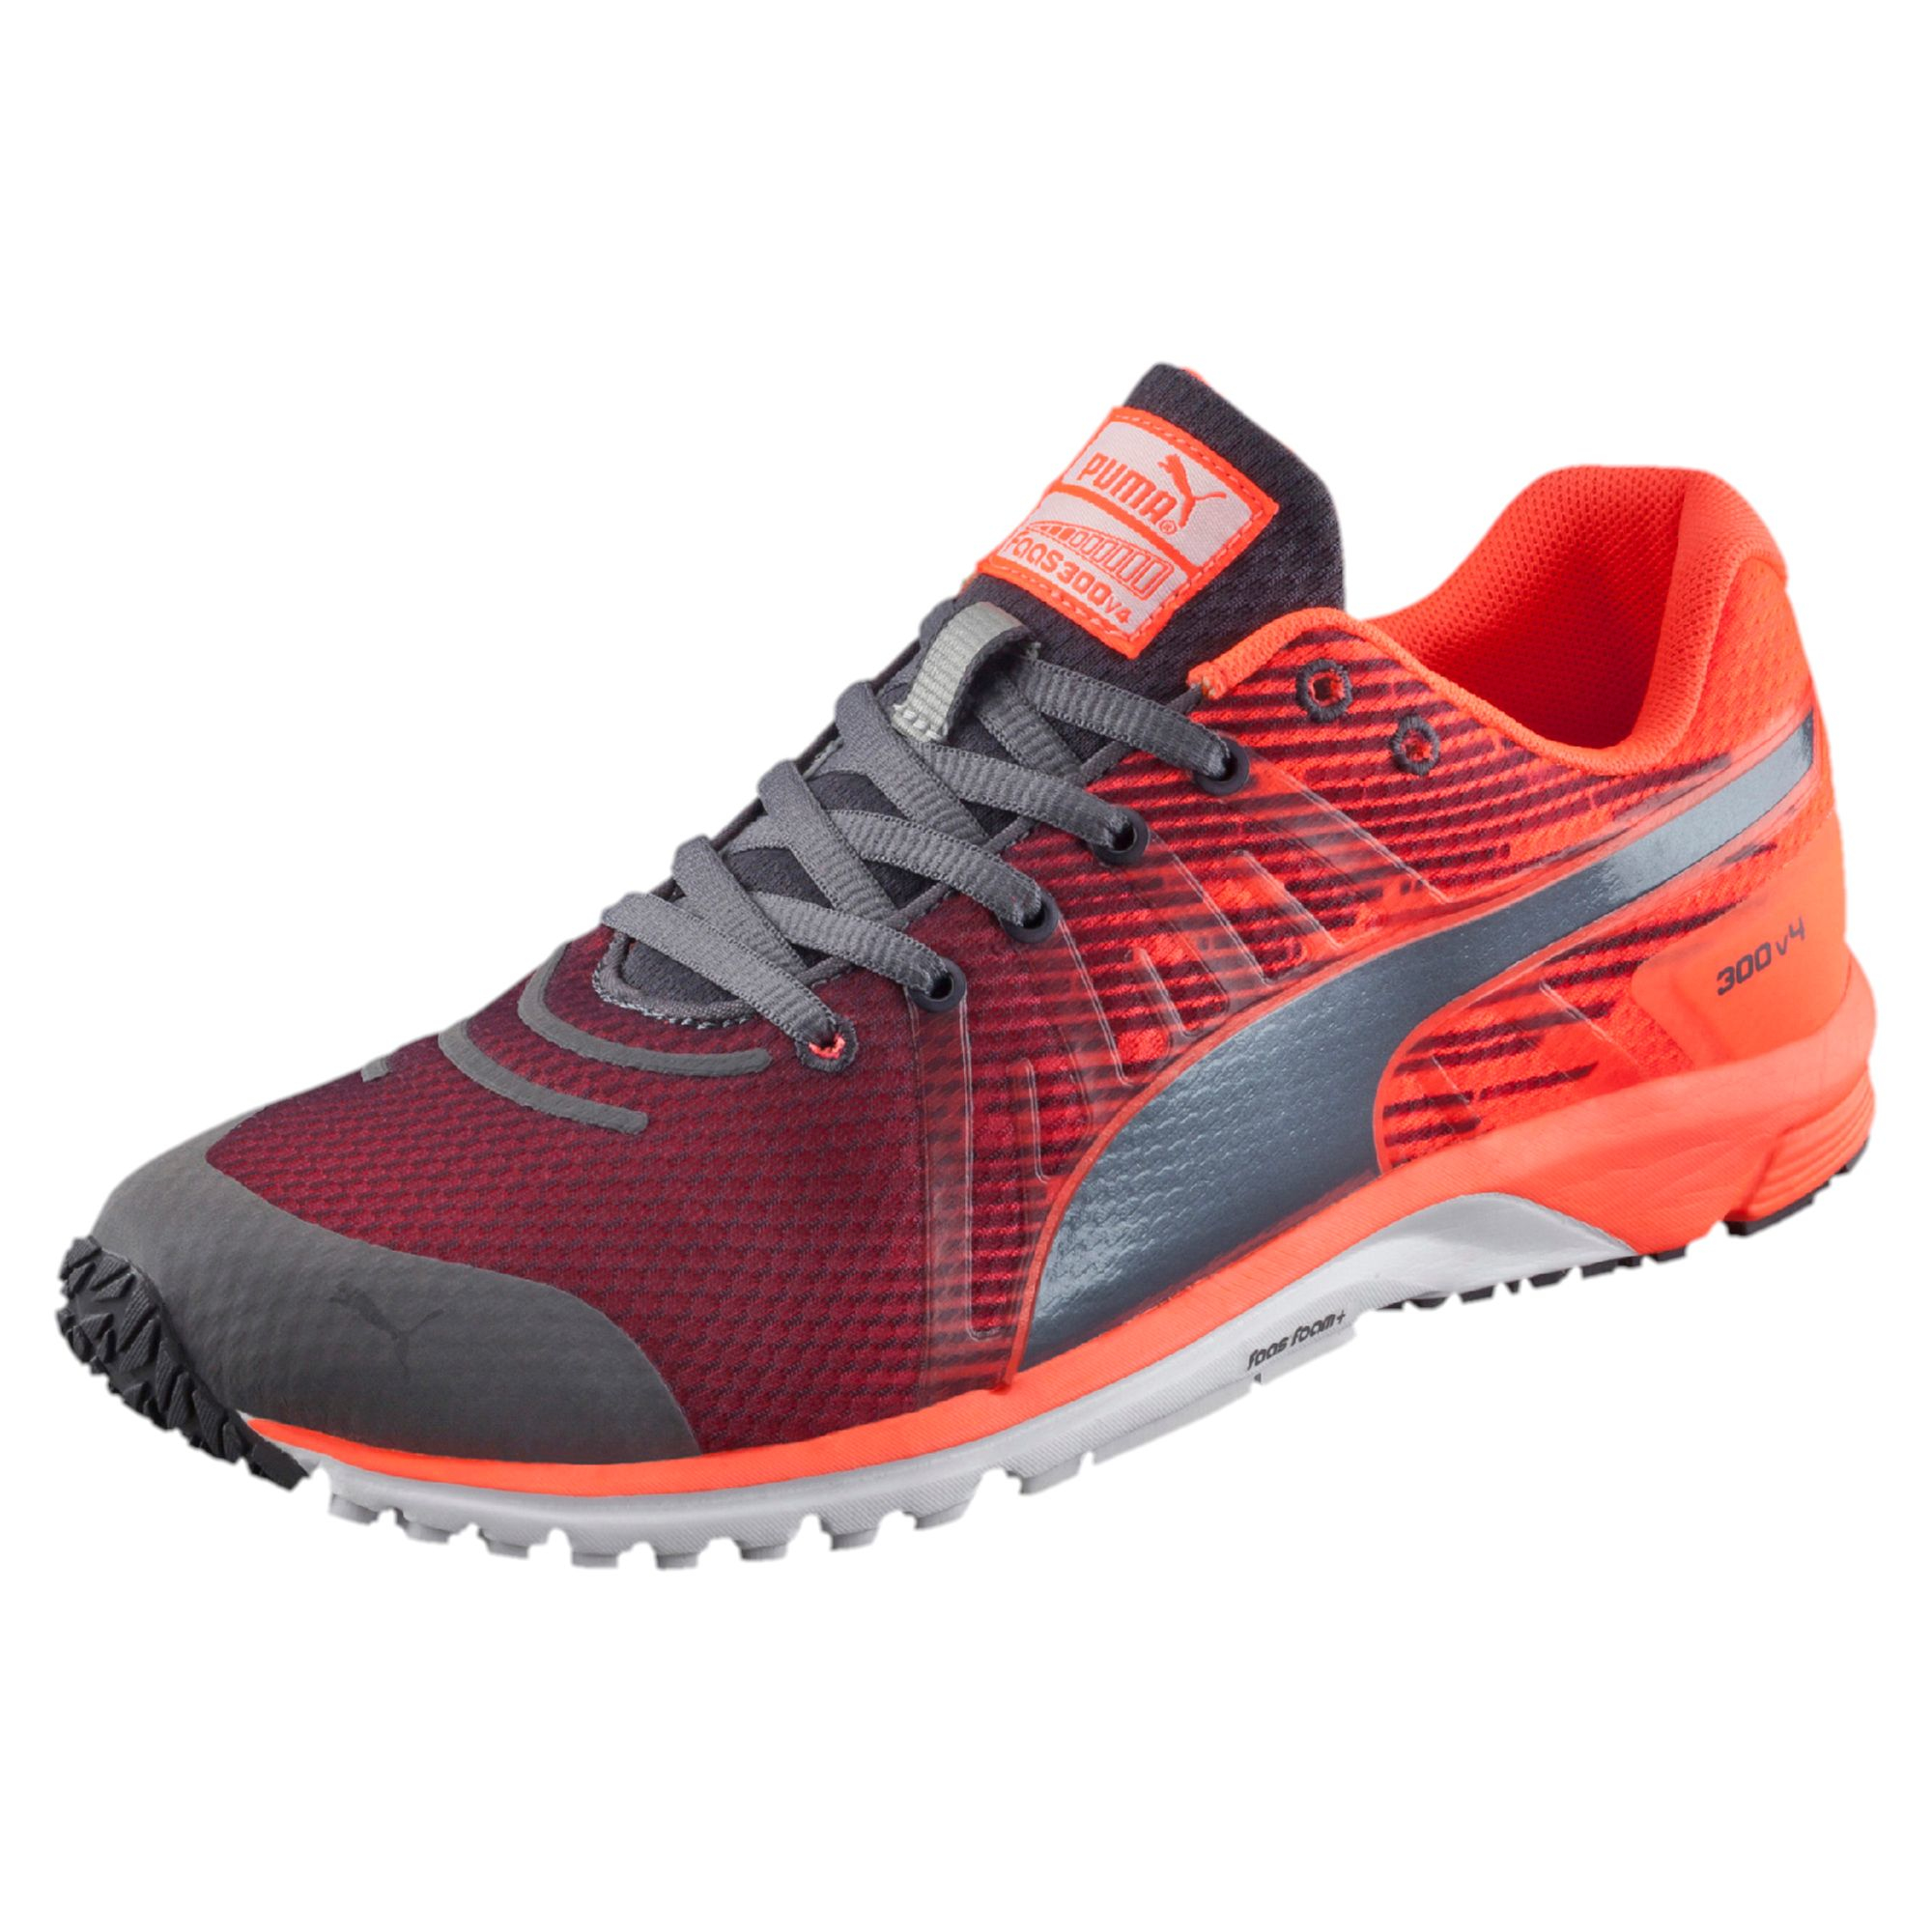 Lyst - PUMA Faas 300 V4 Men's Running Shoes in Orange for Men